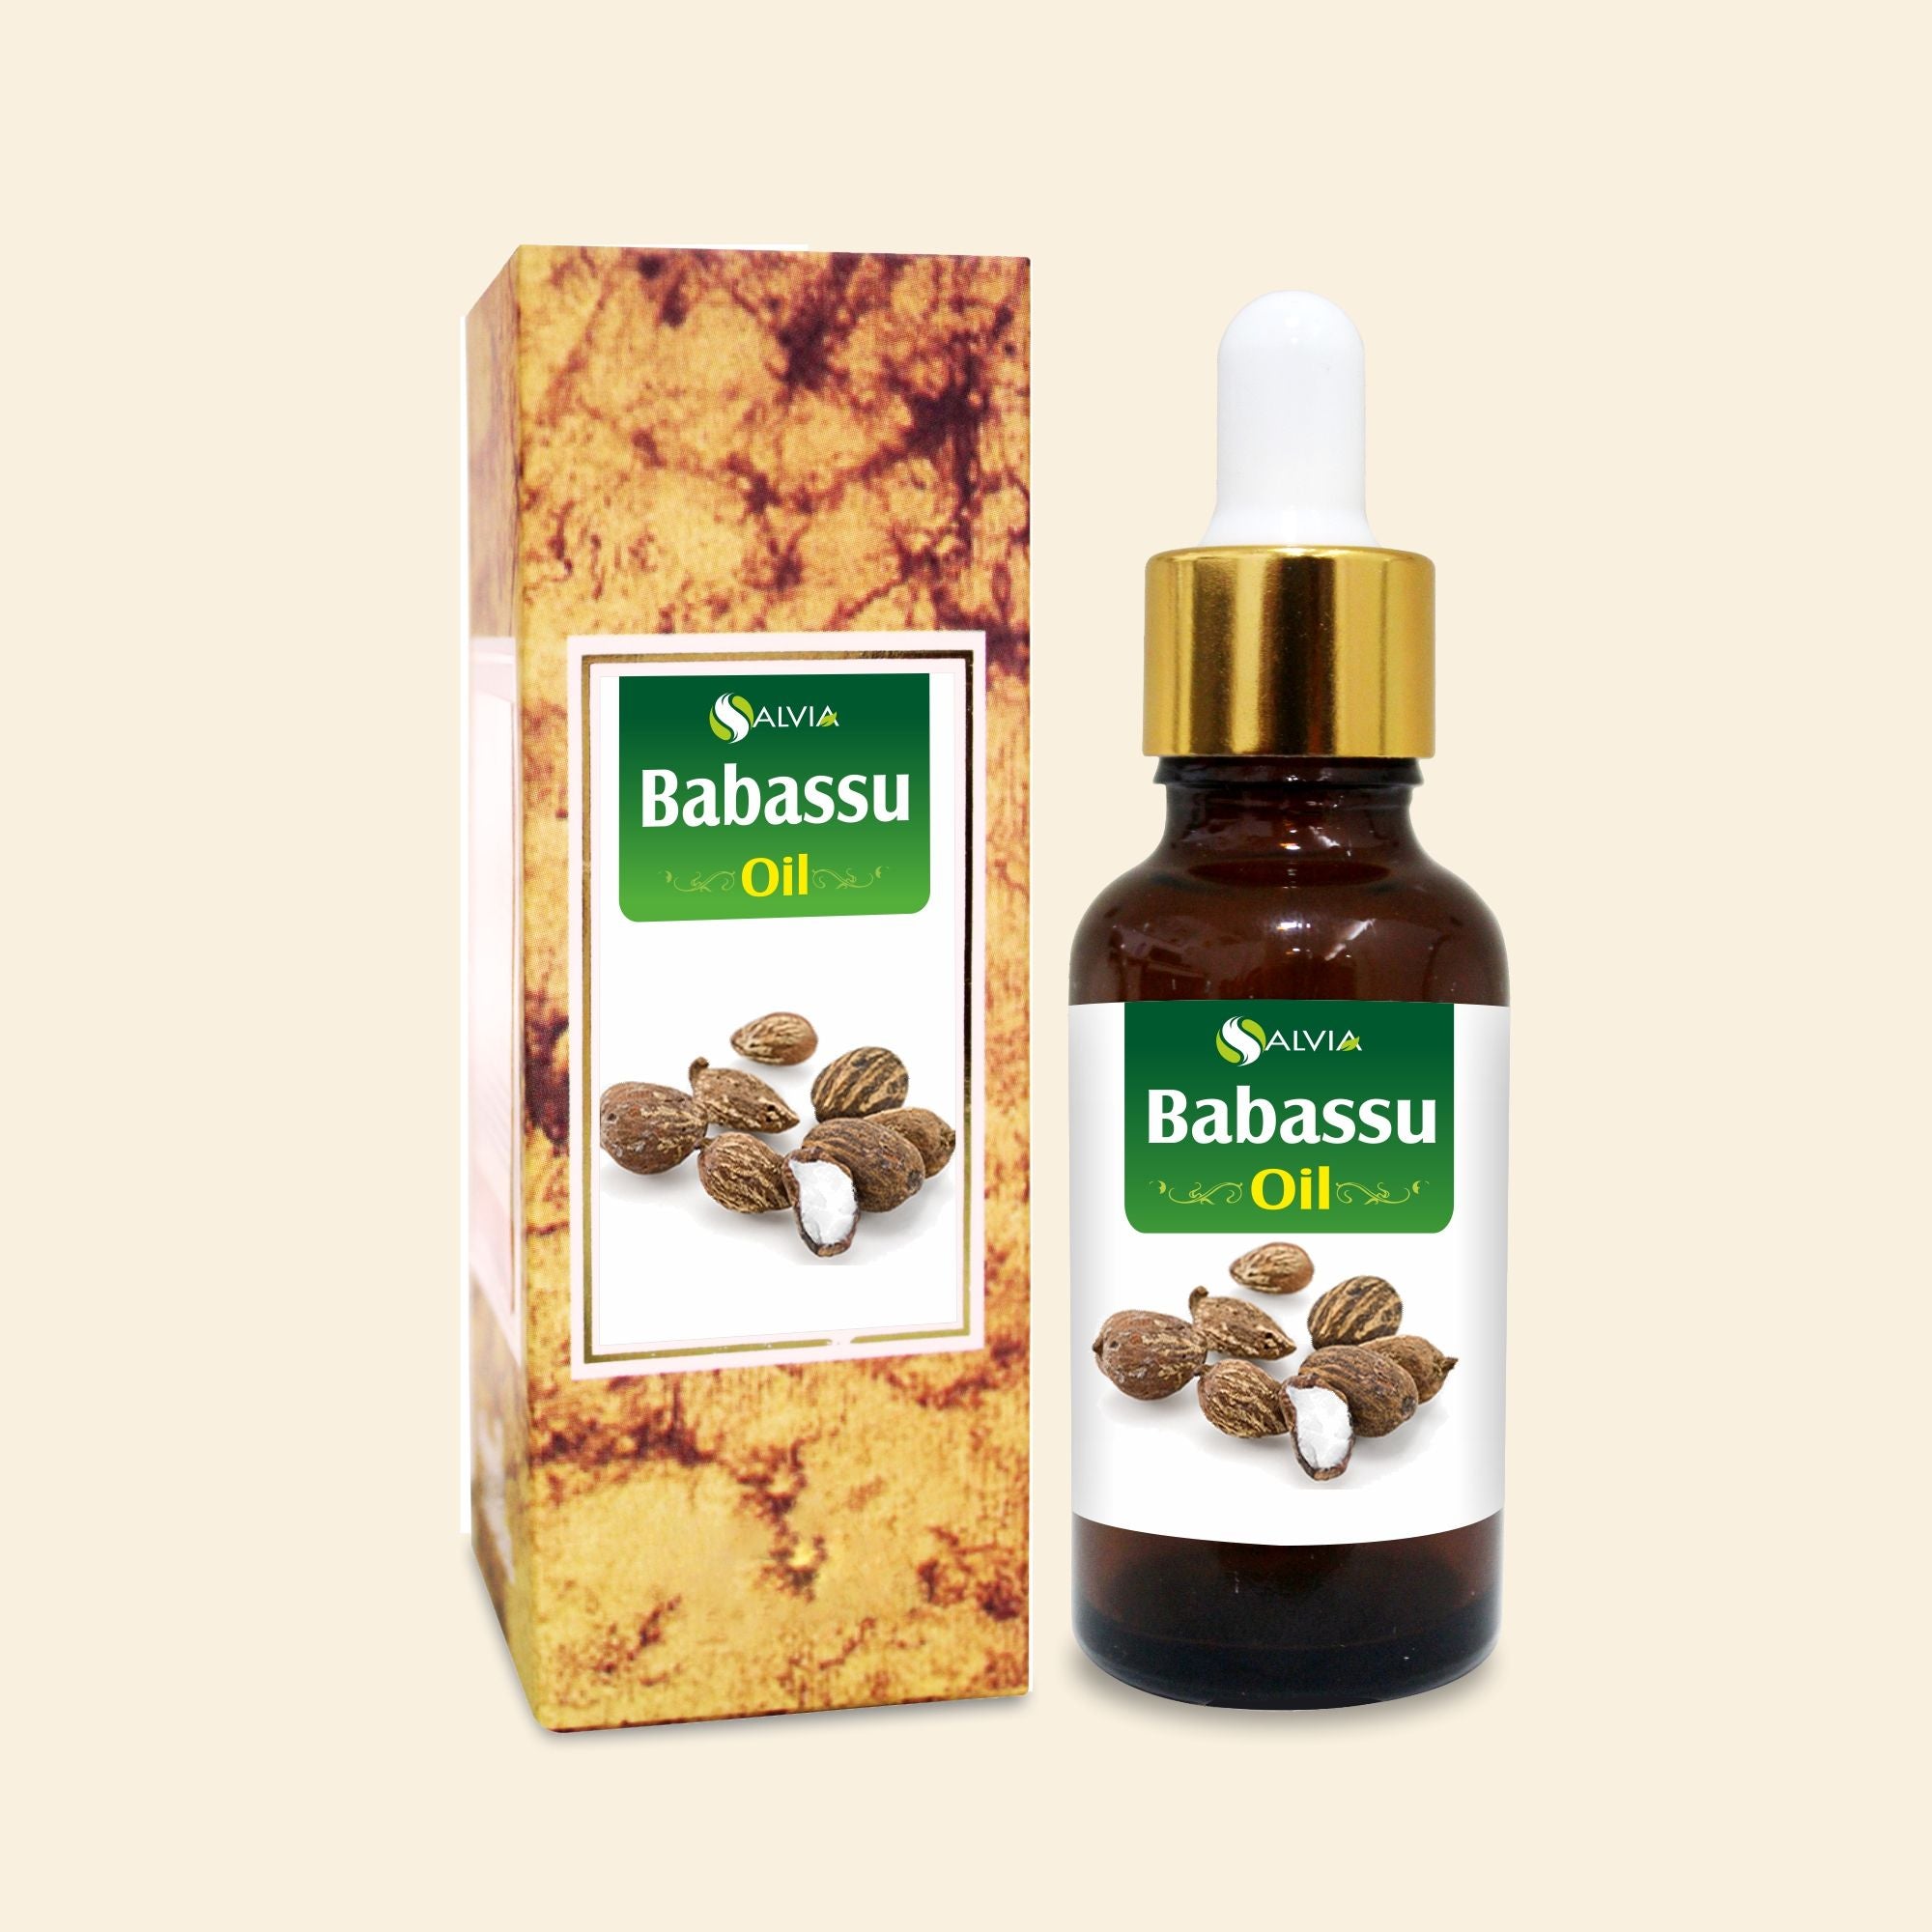 Salvia Natural Carrier Oils Babassu Essential Oil